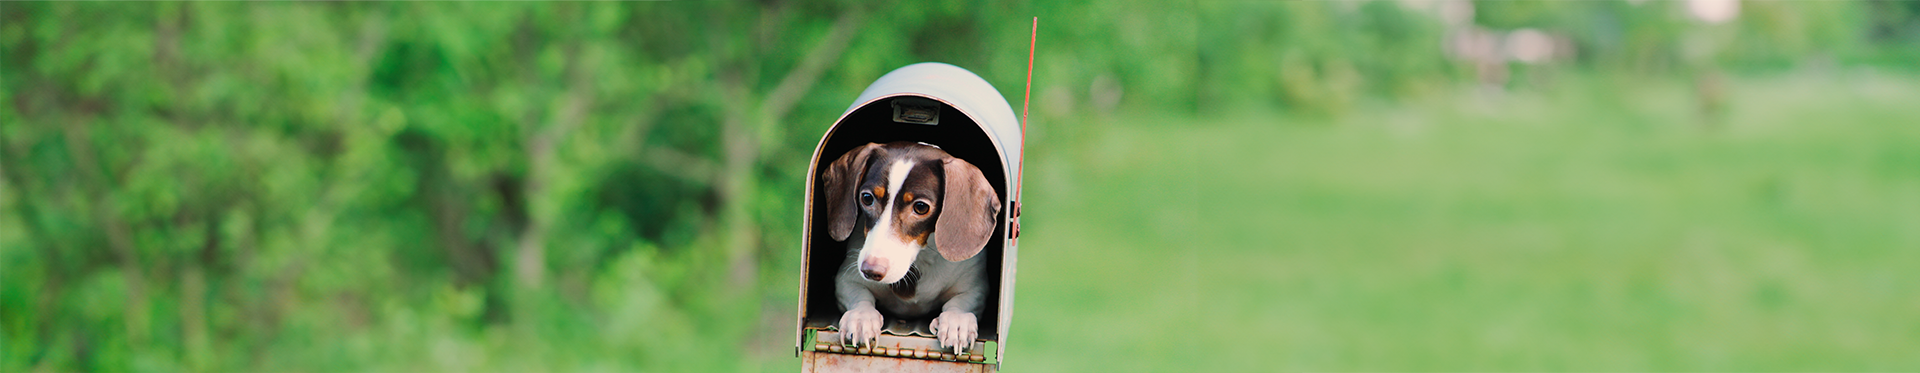 Dachshund puppy hiding inside a mailbox 